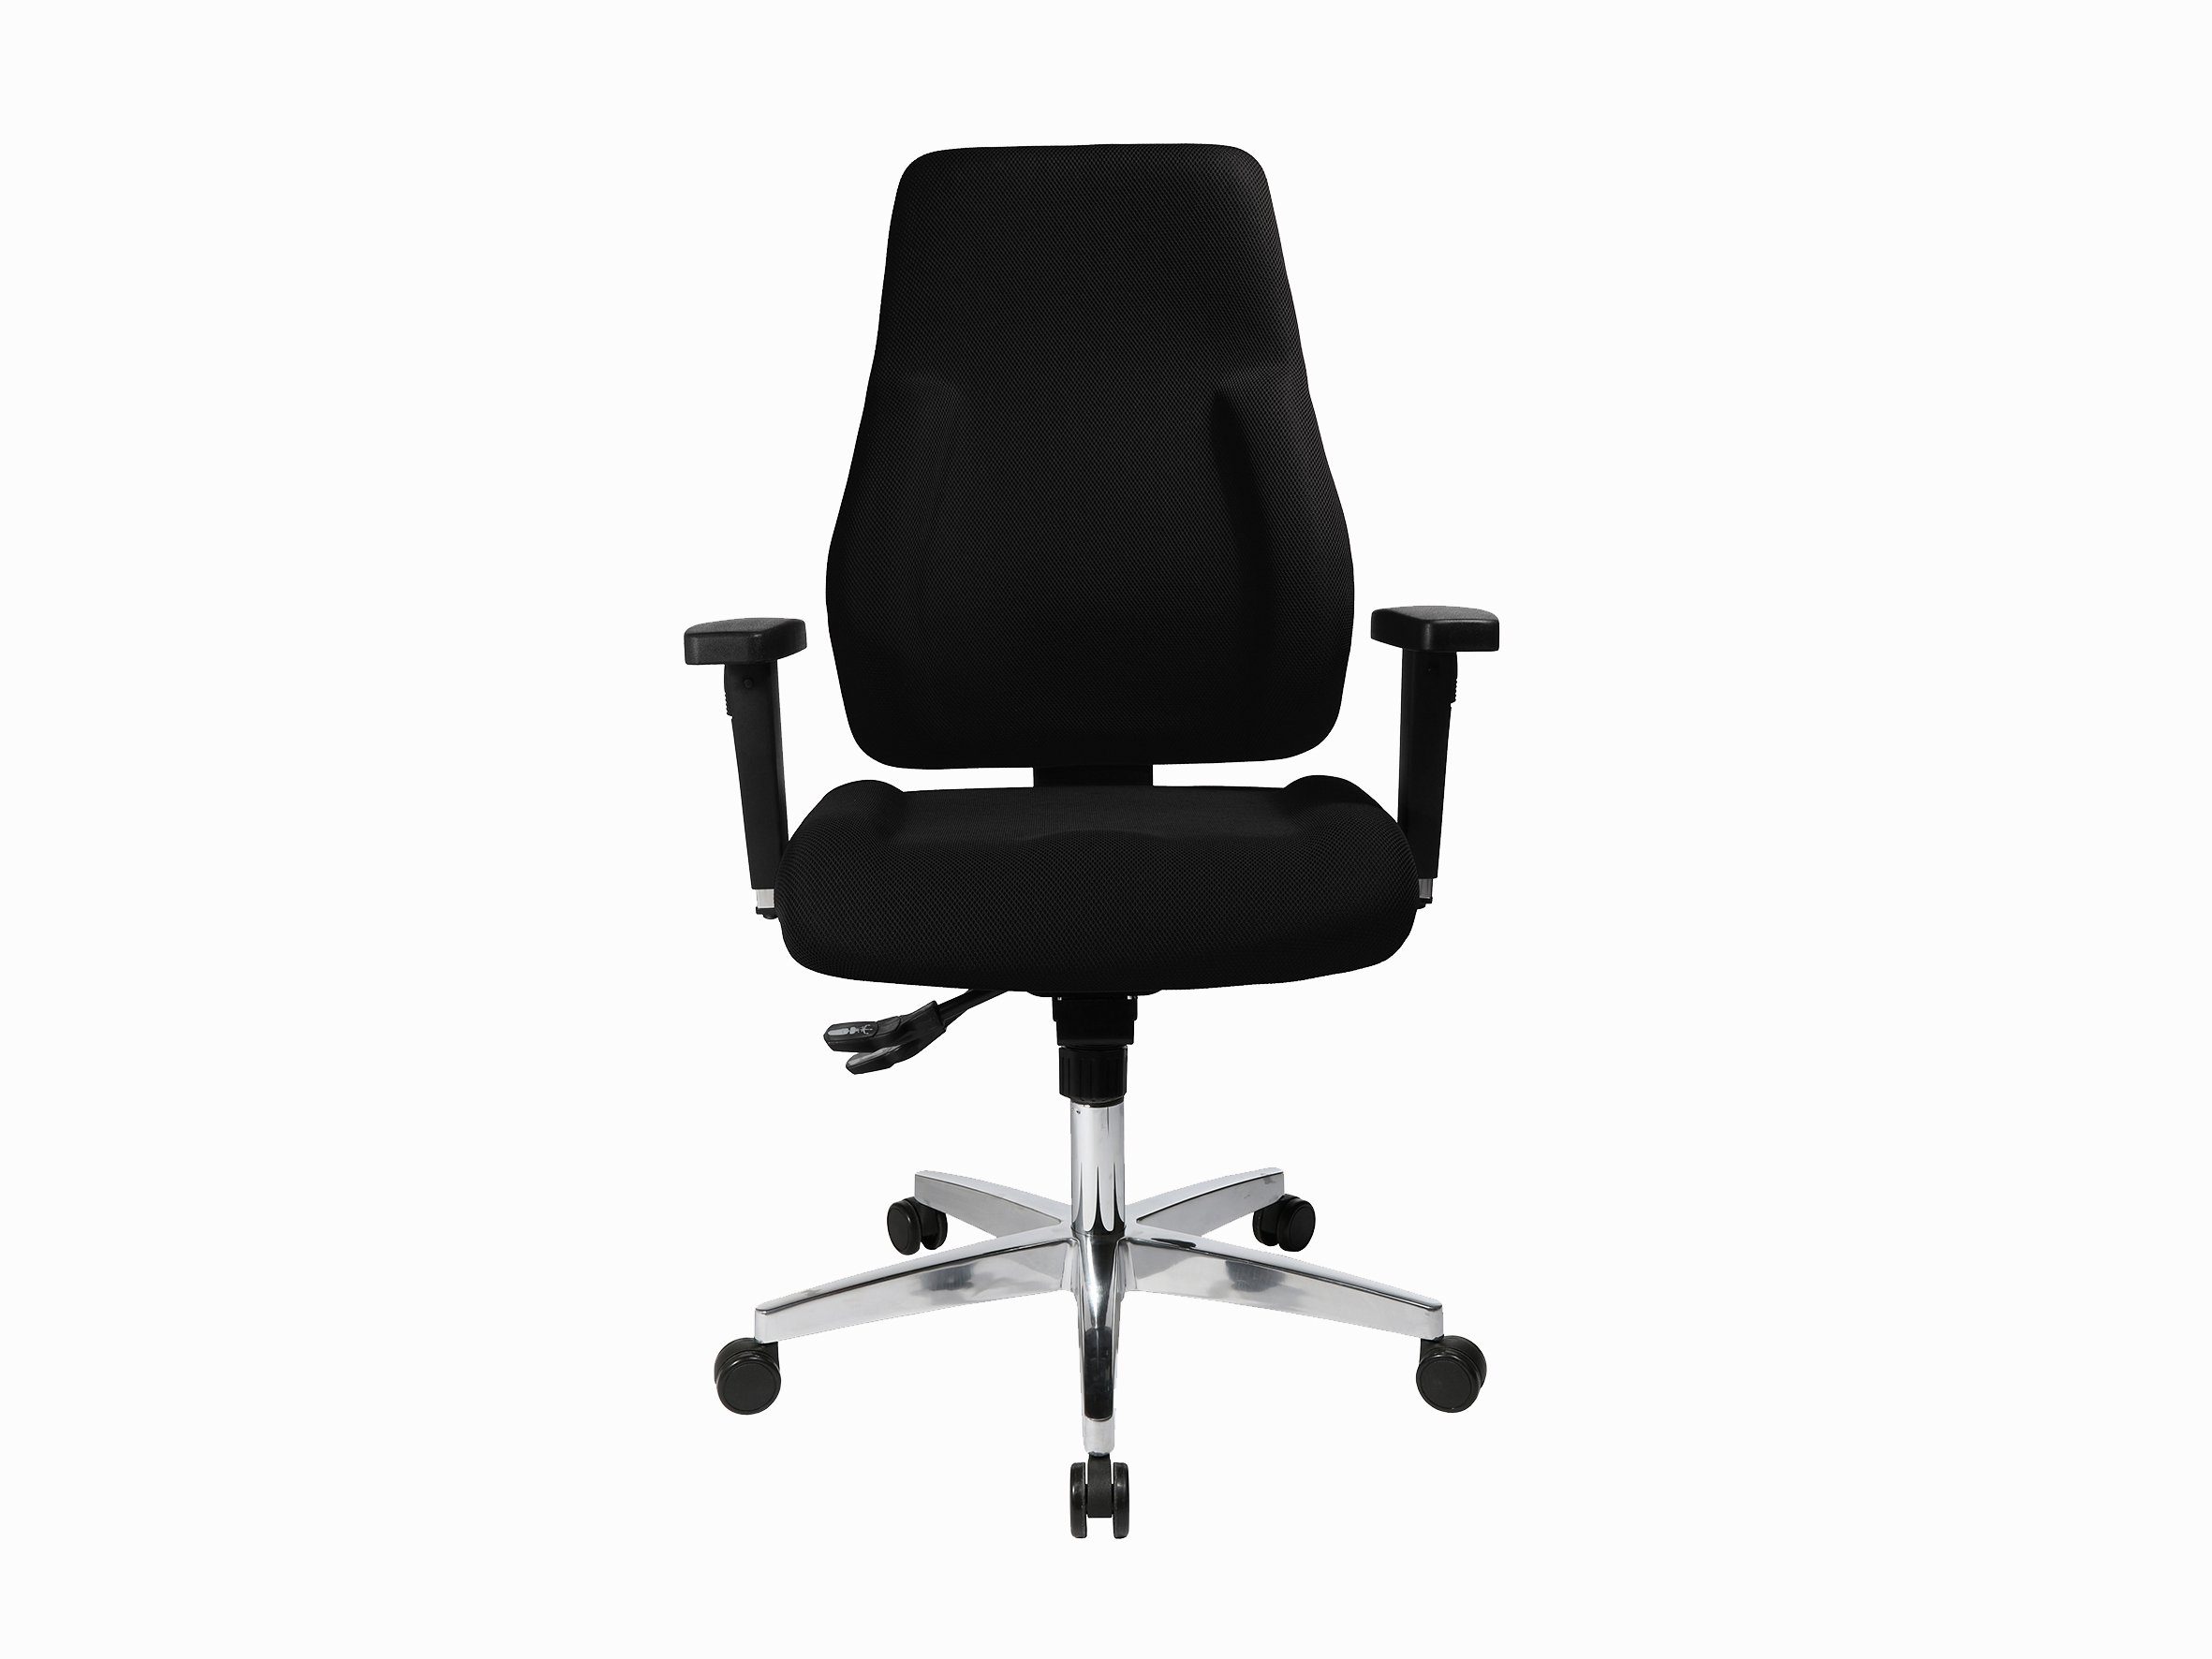 Stuhl schwarz Stoff/Aluminium, Material schwarz, Material Drehstuhl, Moebel-Eins P91 P91 Drehstuhl, Stoff/Aluminium,